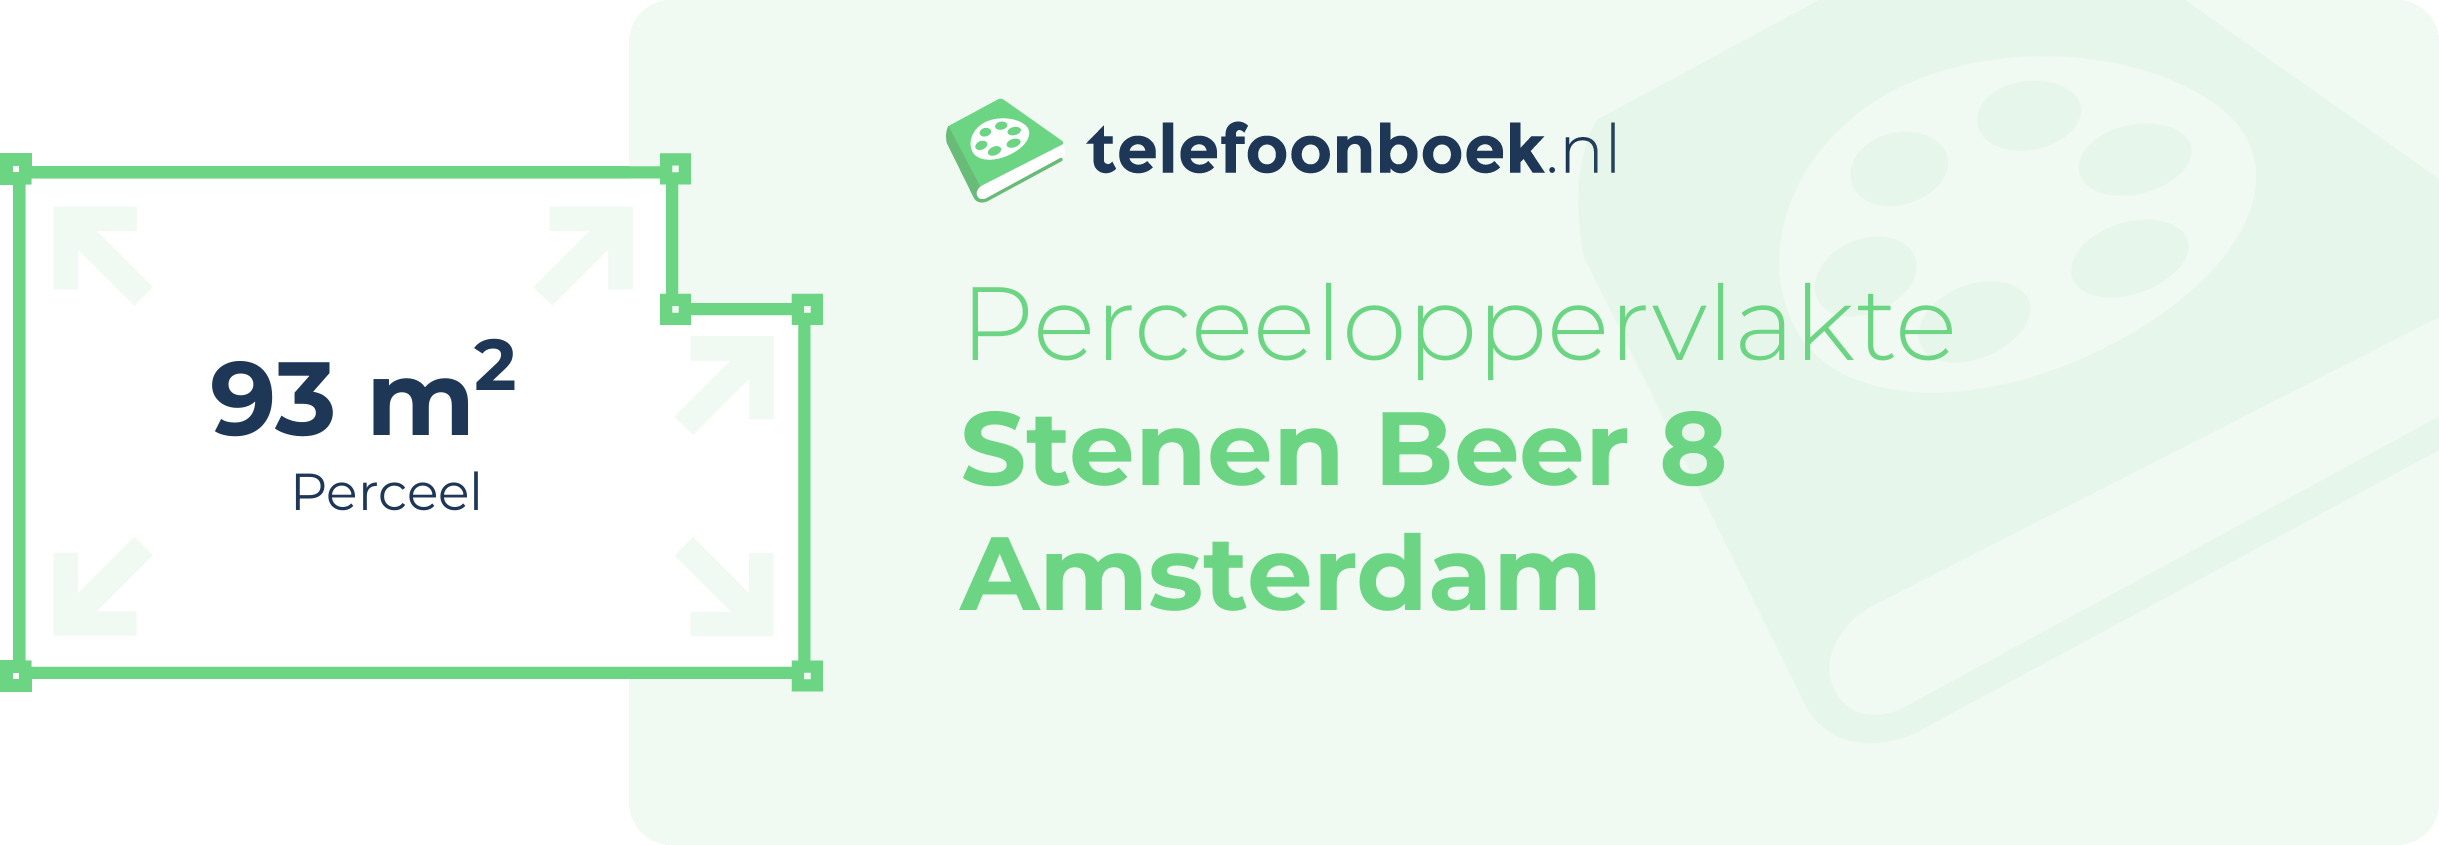 Perceeloppervlakte Stenen Beer 8 Amsterdam